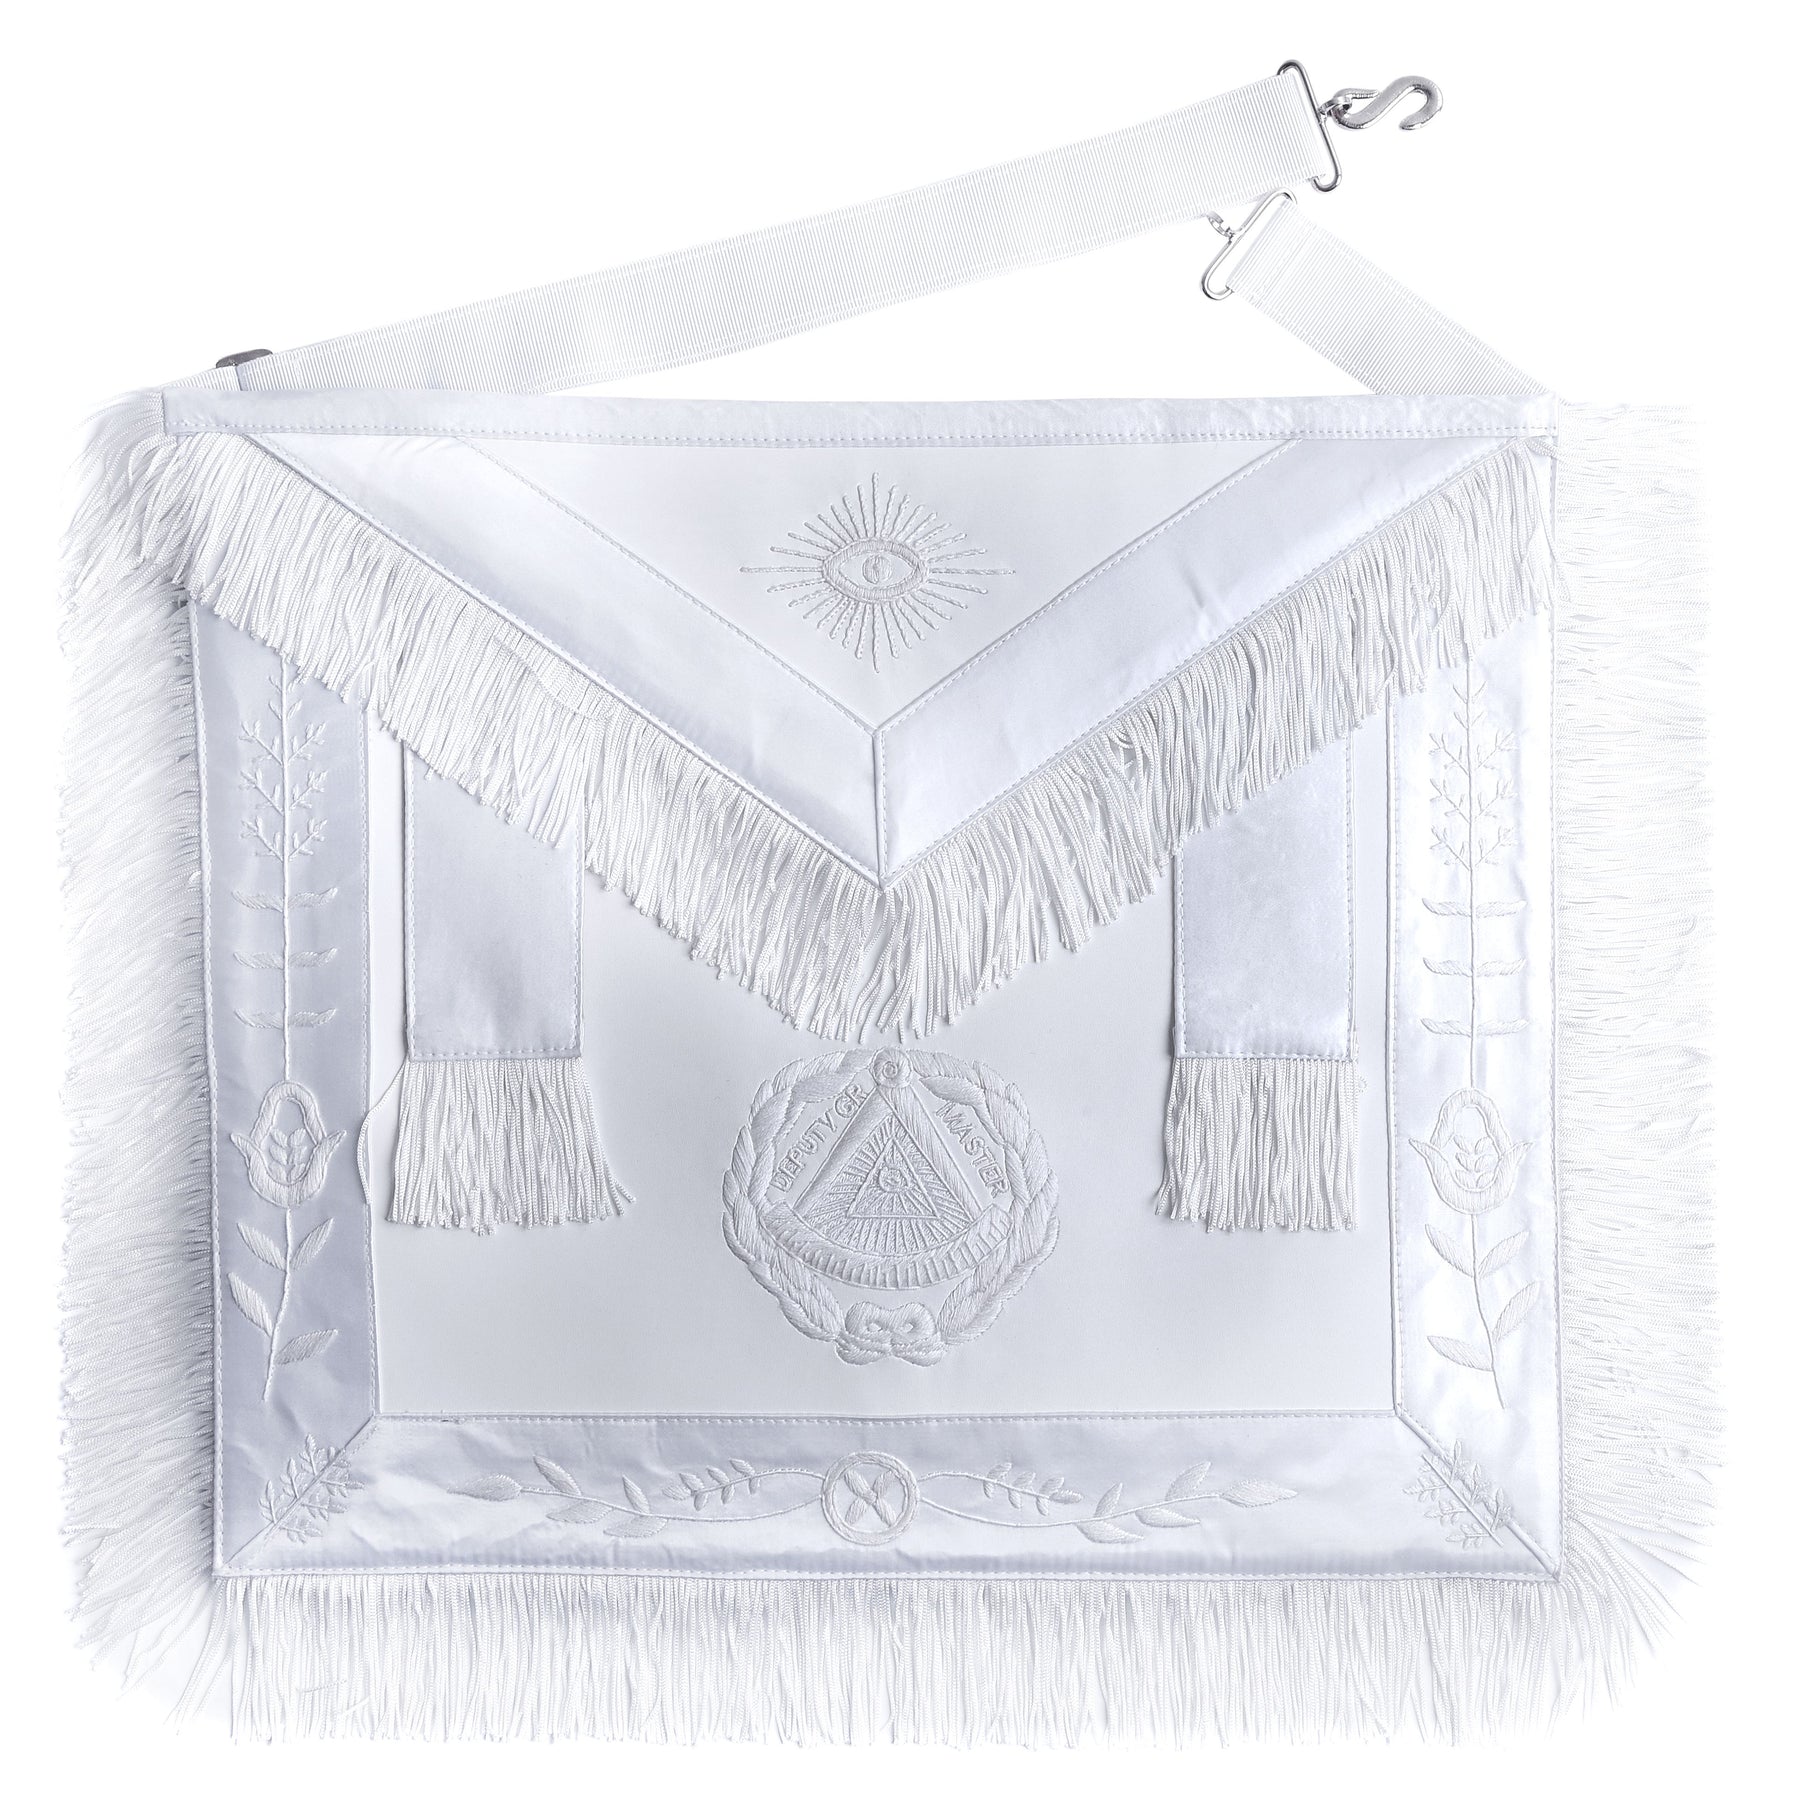 Deputy Grand Master Blue Lodge Apron - All White With Braid & Fringe - Bricks Masons